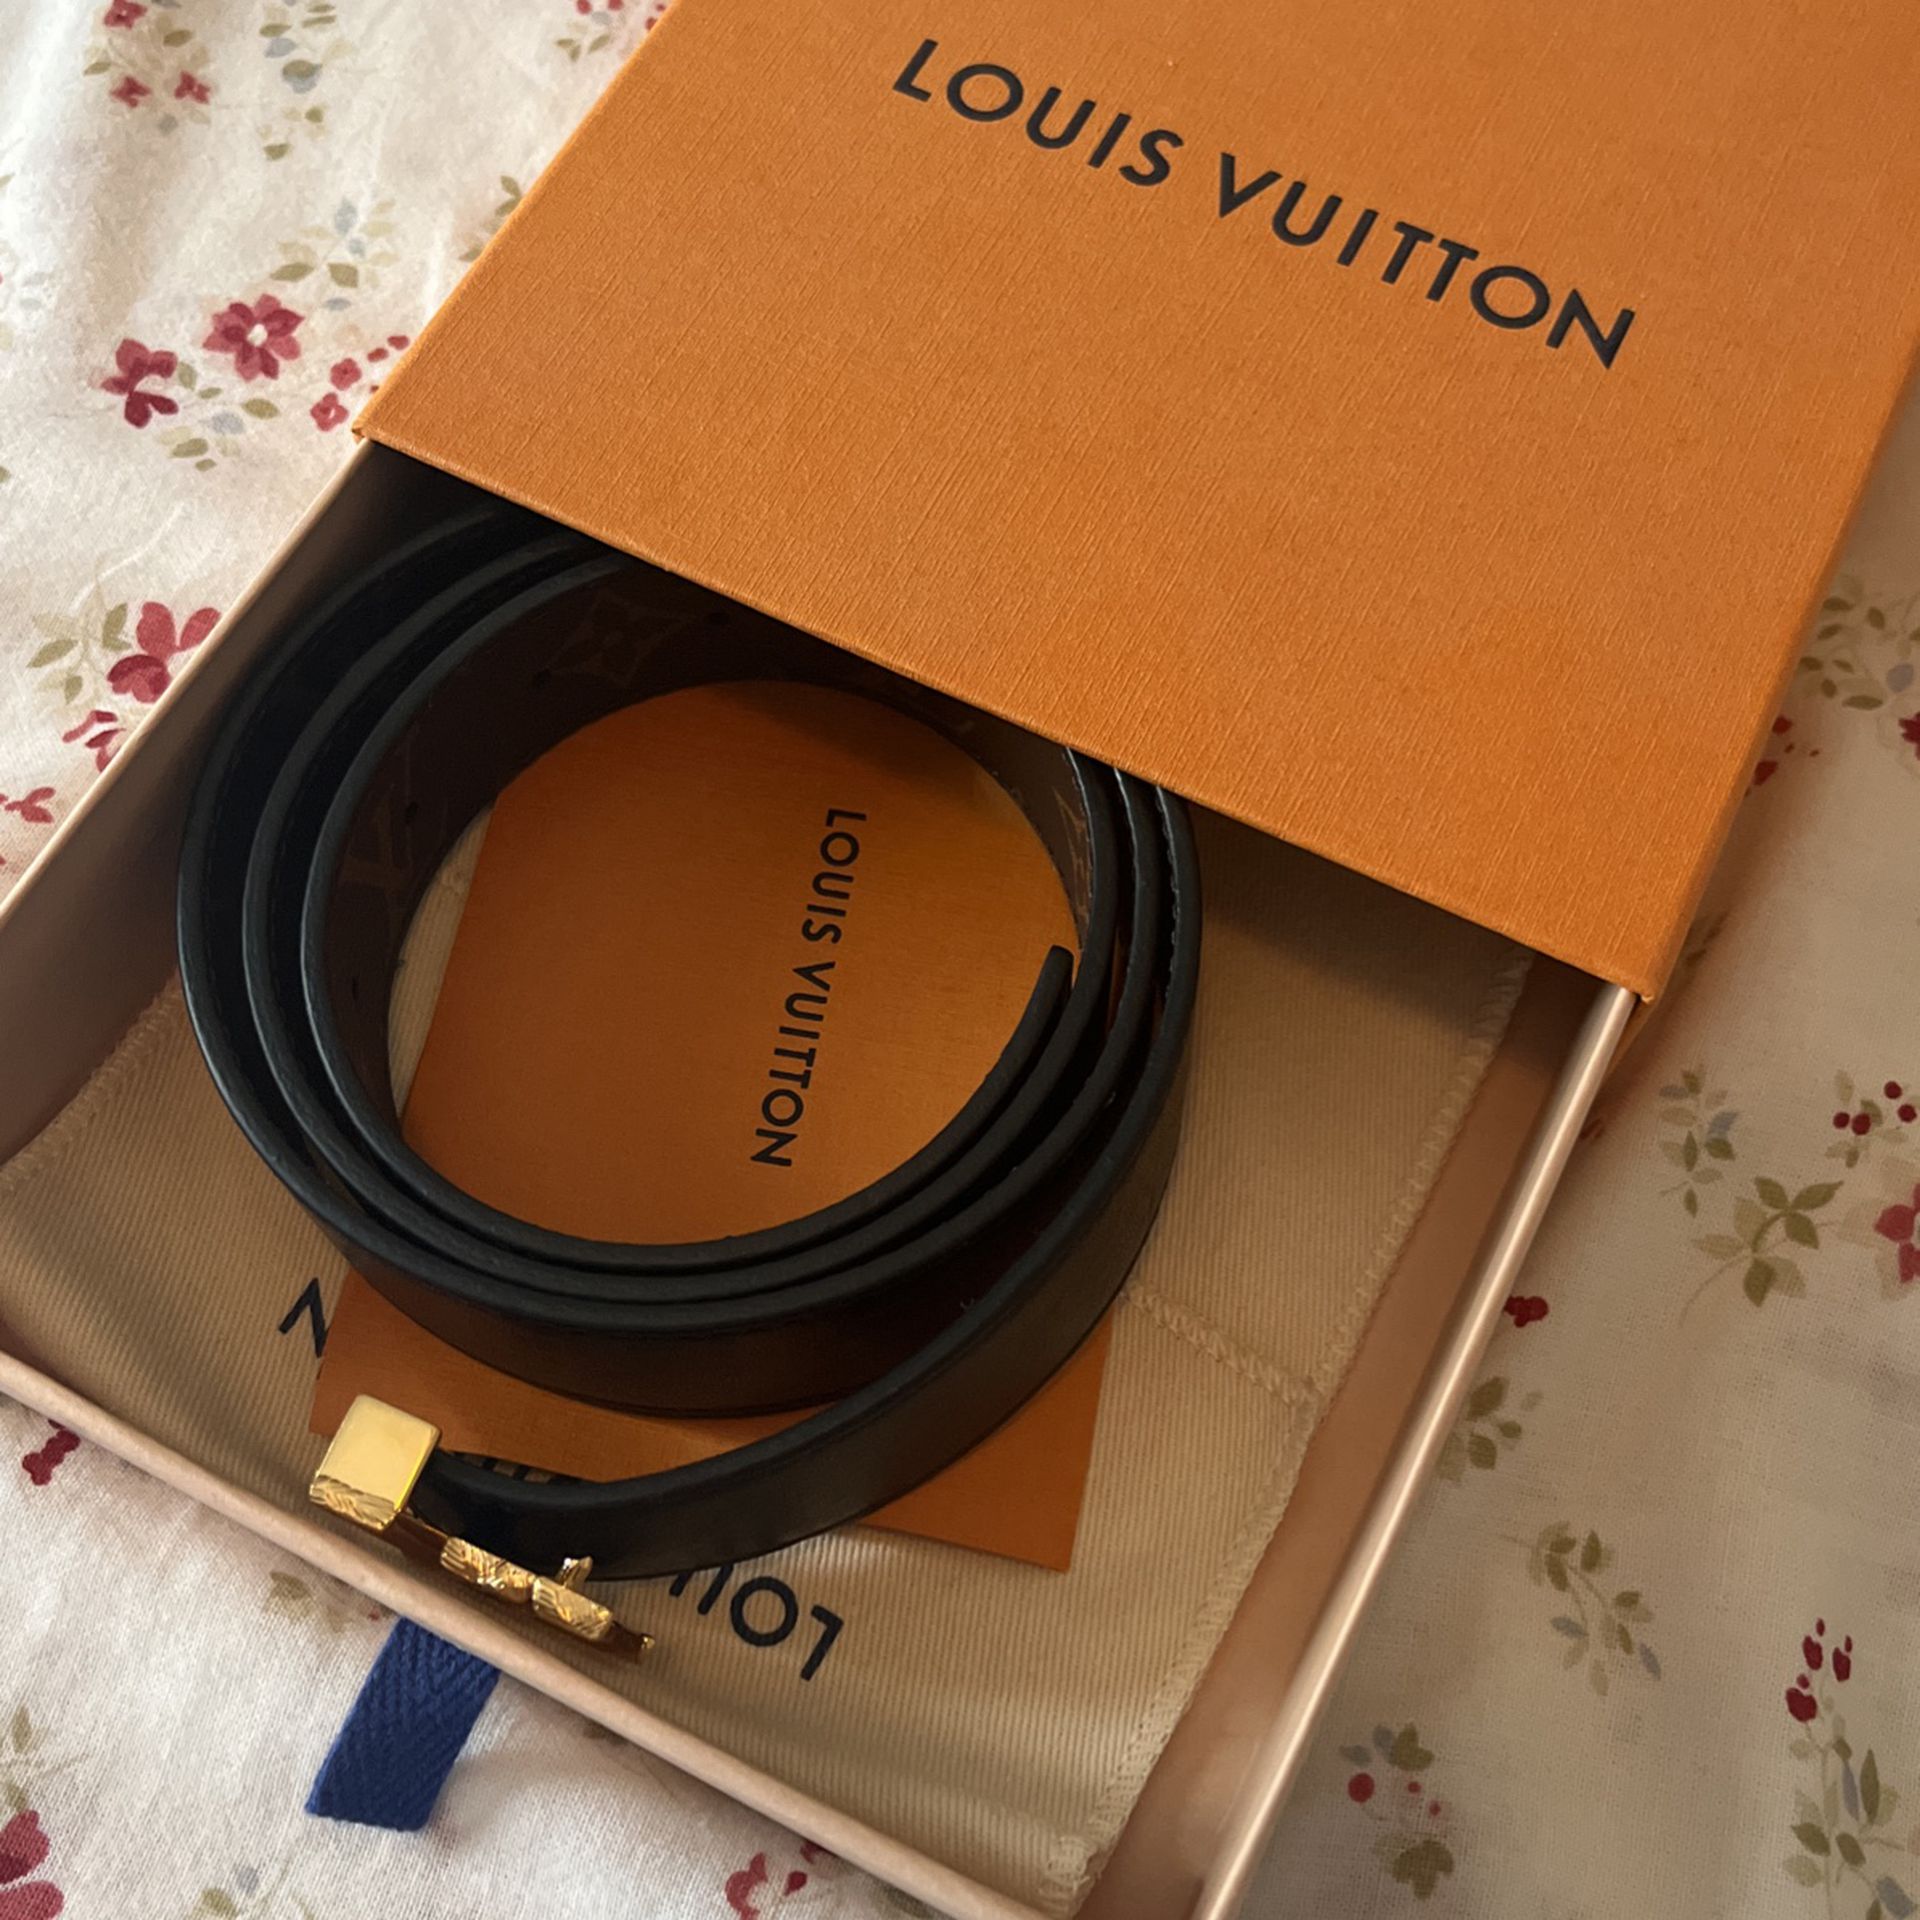 Louis Vuitton Belt for Sale in Long Beach, CA - OfferUp